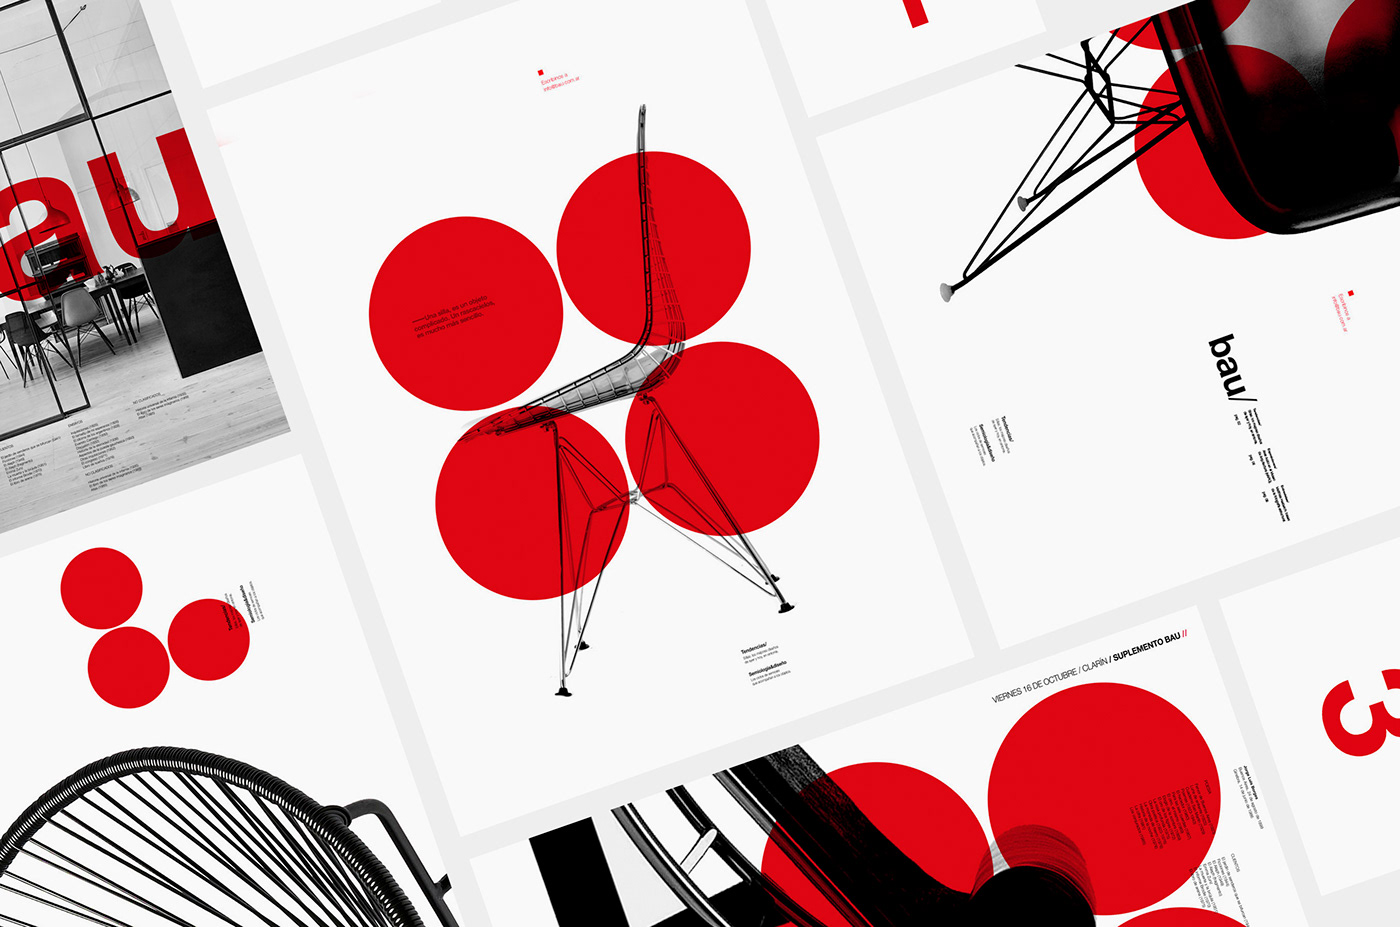 bau magazine helvetica modernism editorial Suplemento swiss minimalist EAMES typography  